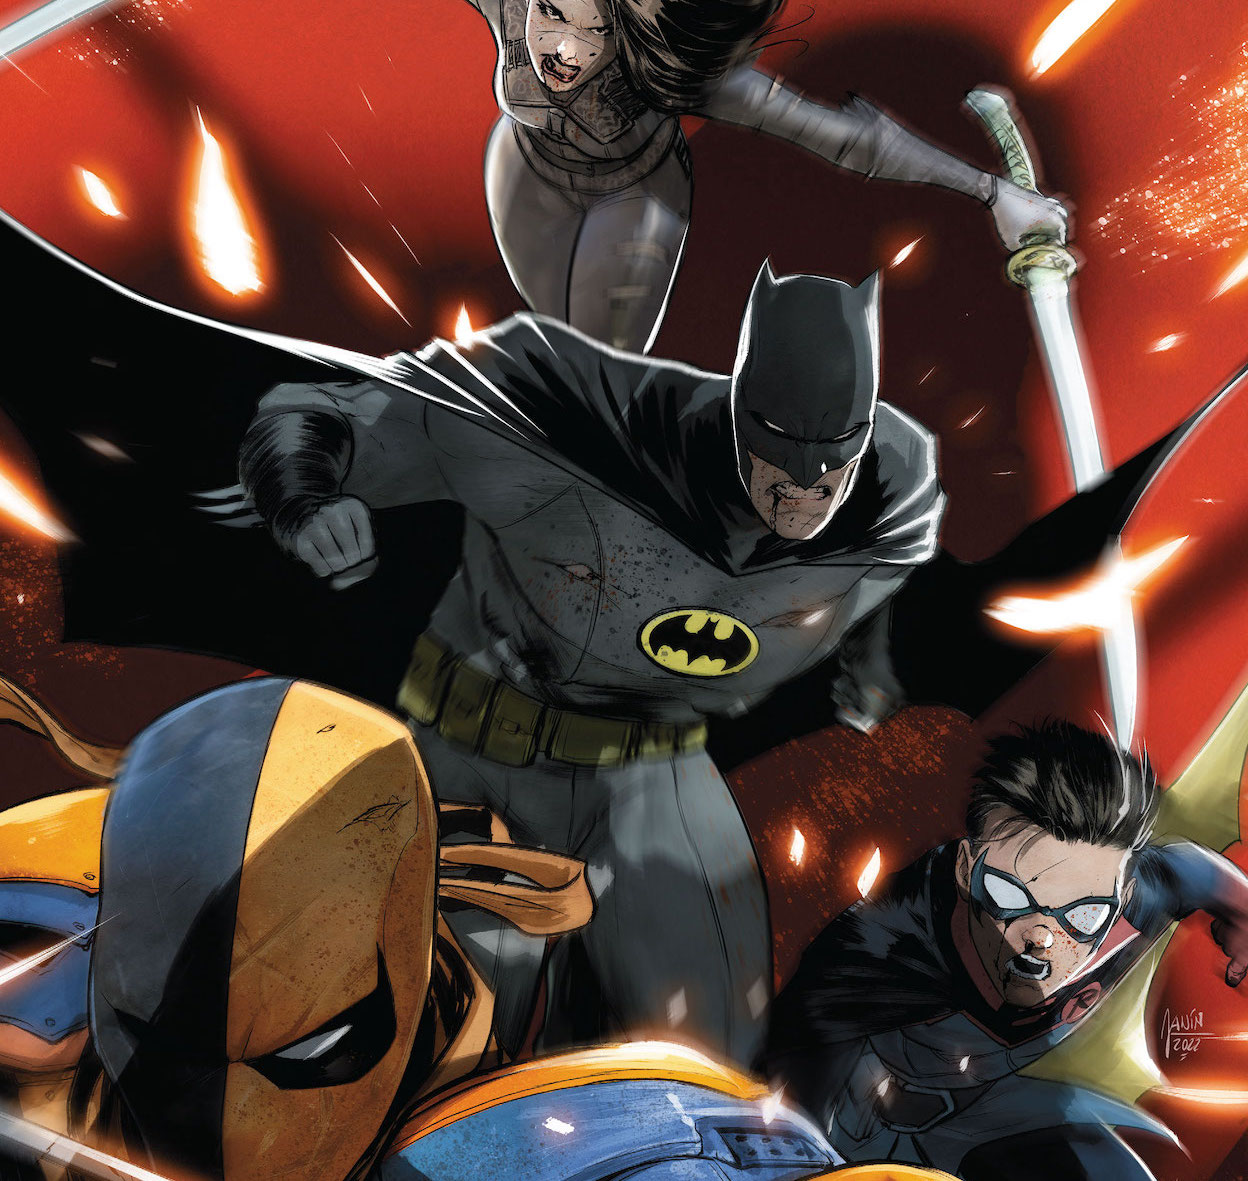 'Shadow War: Omega' #1 takes a geopolitical war directly to Batman